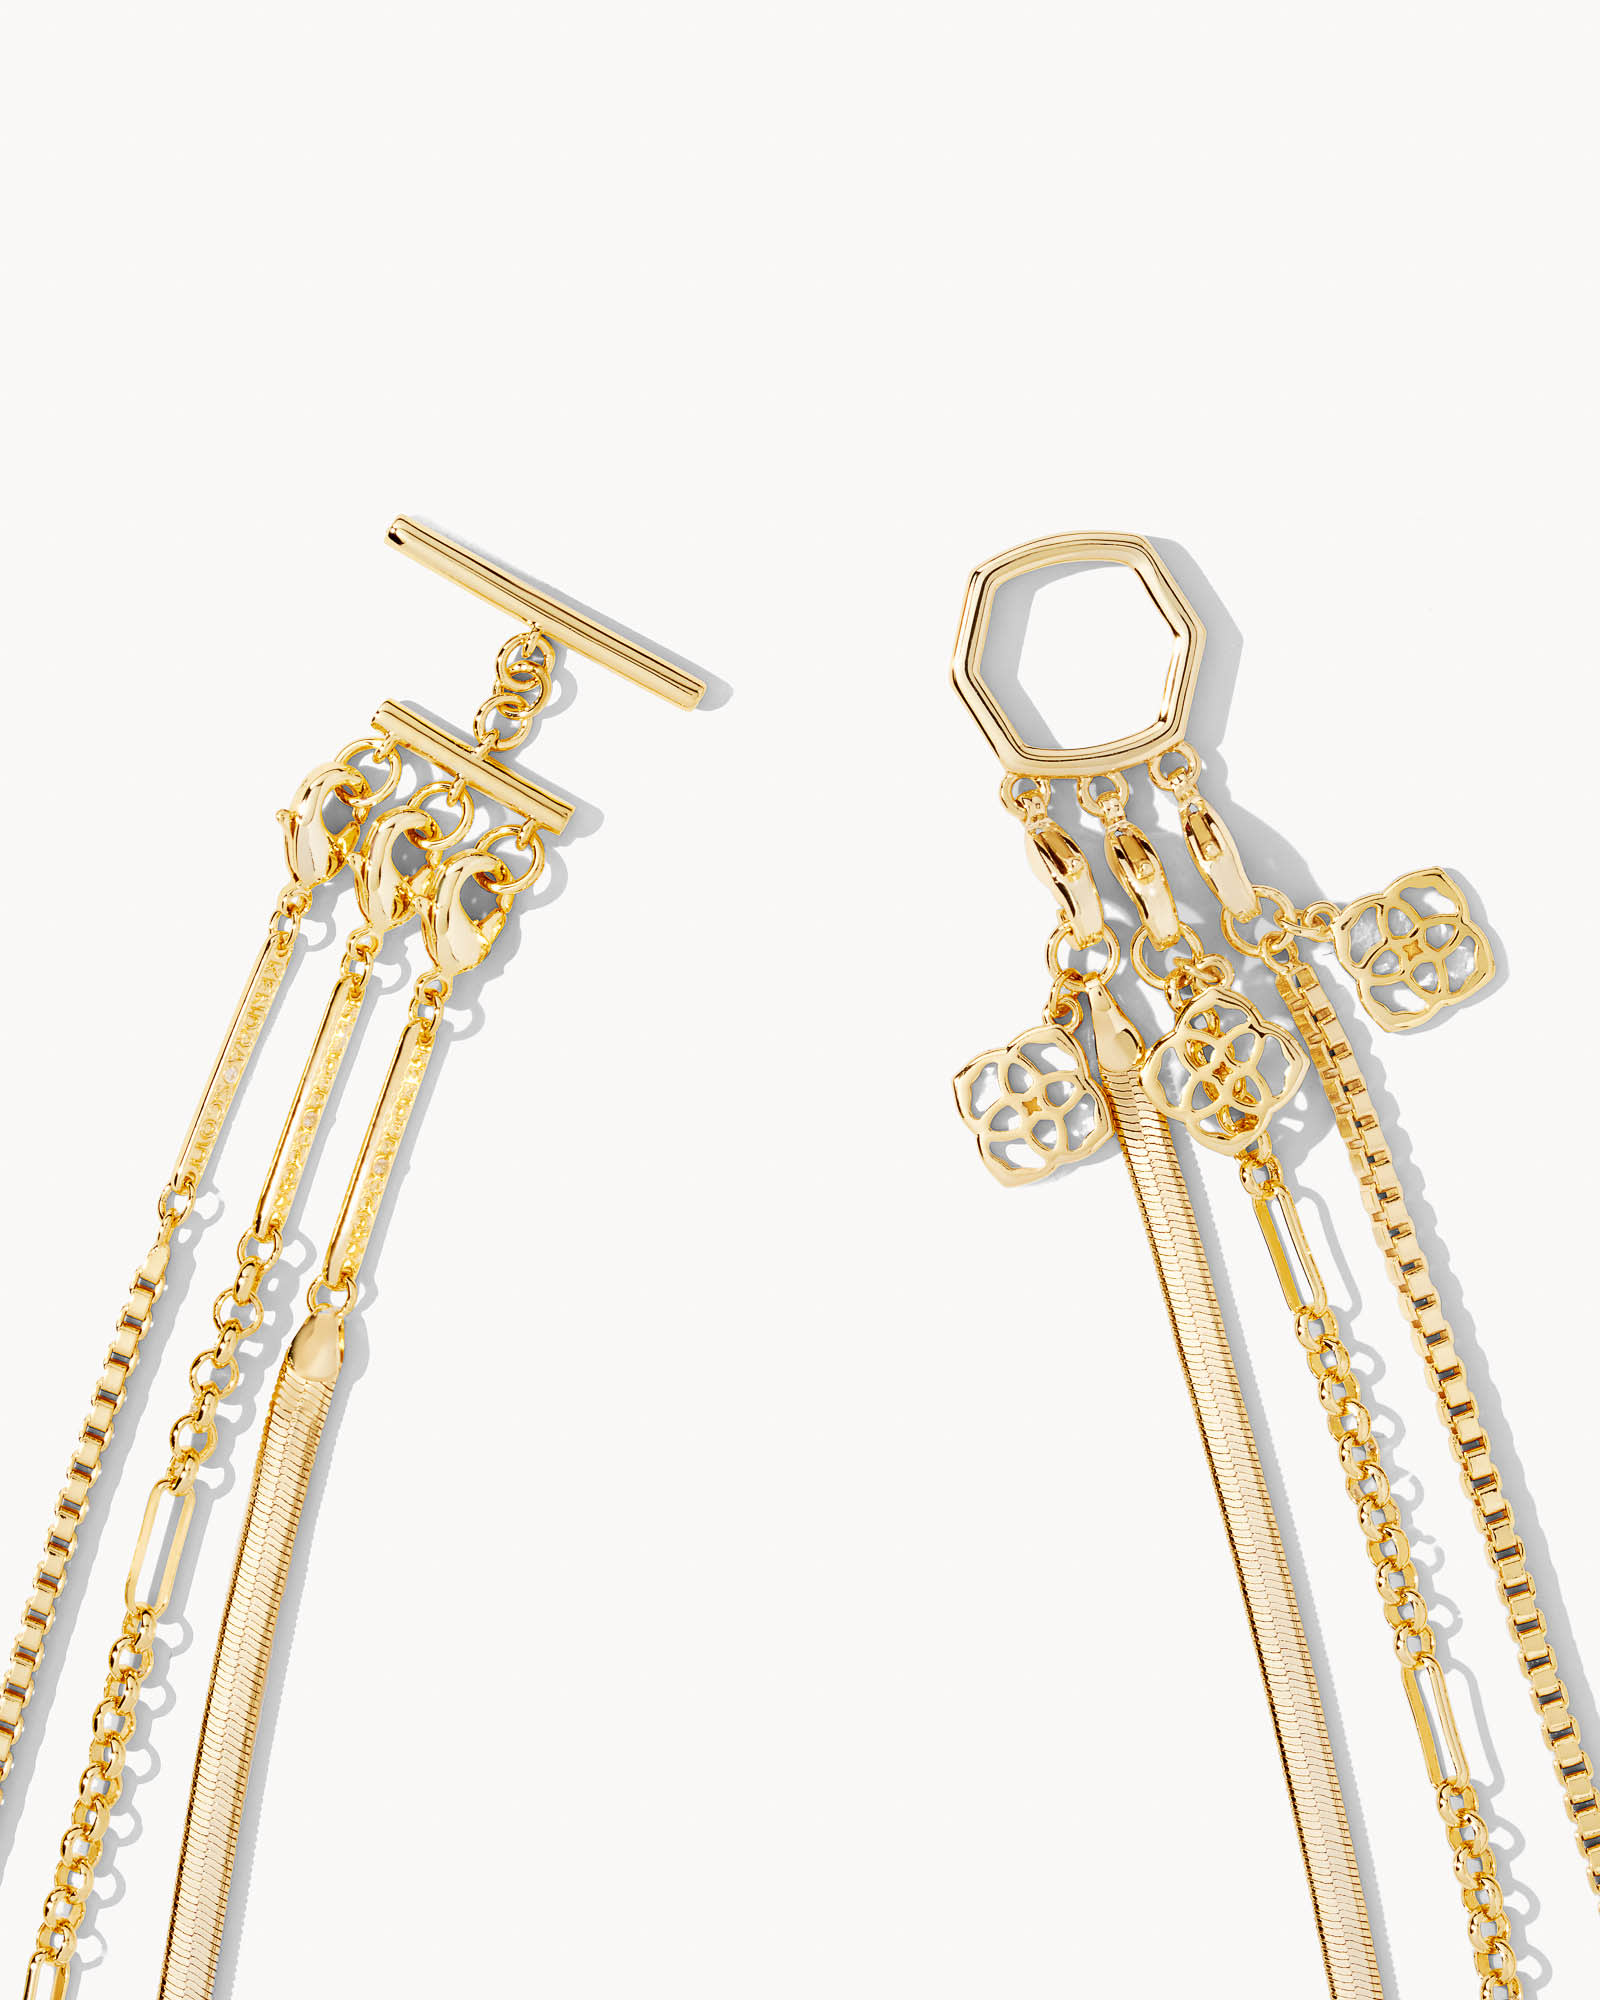 Davis Gold Chain Triple Strand Necklace in Iridescent Opalite